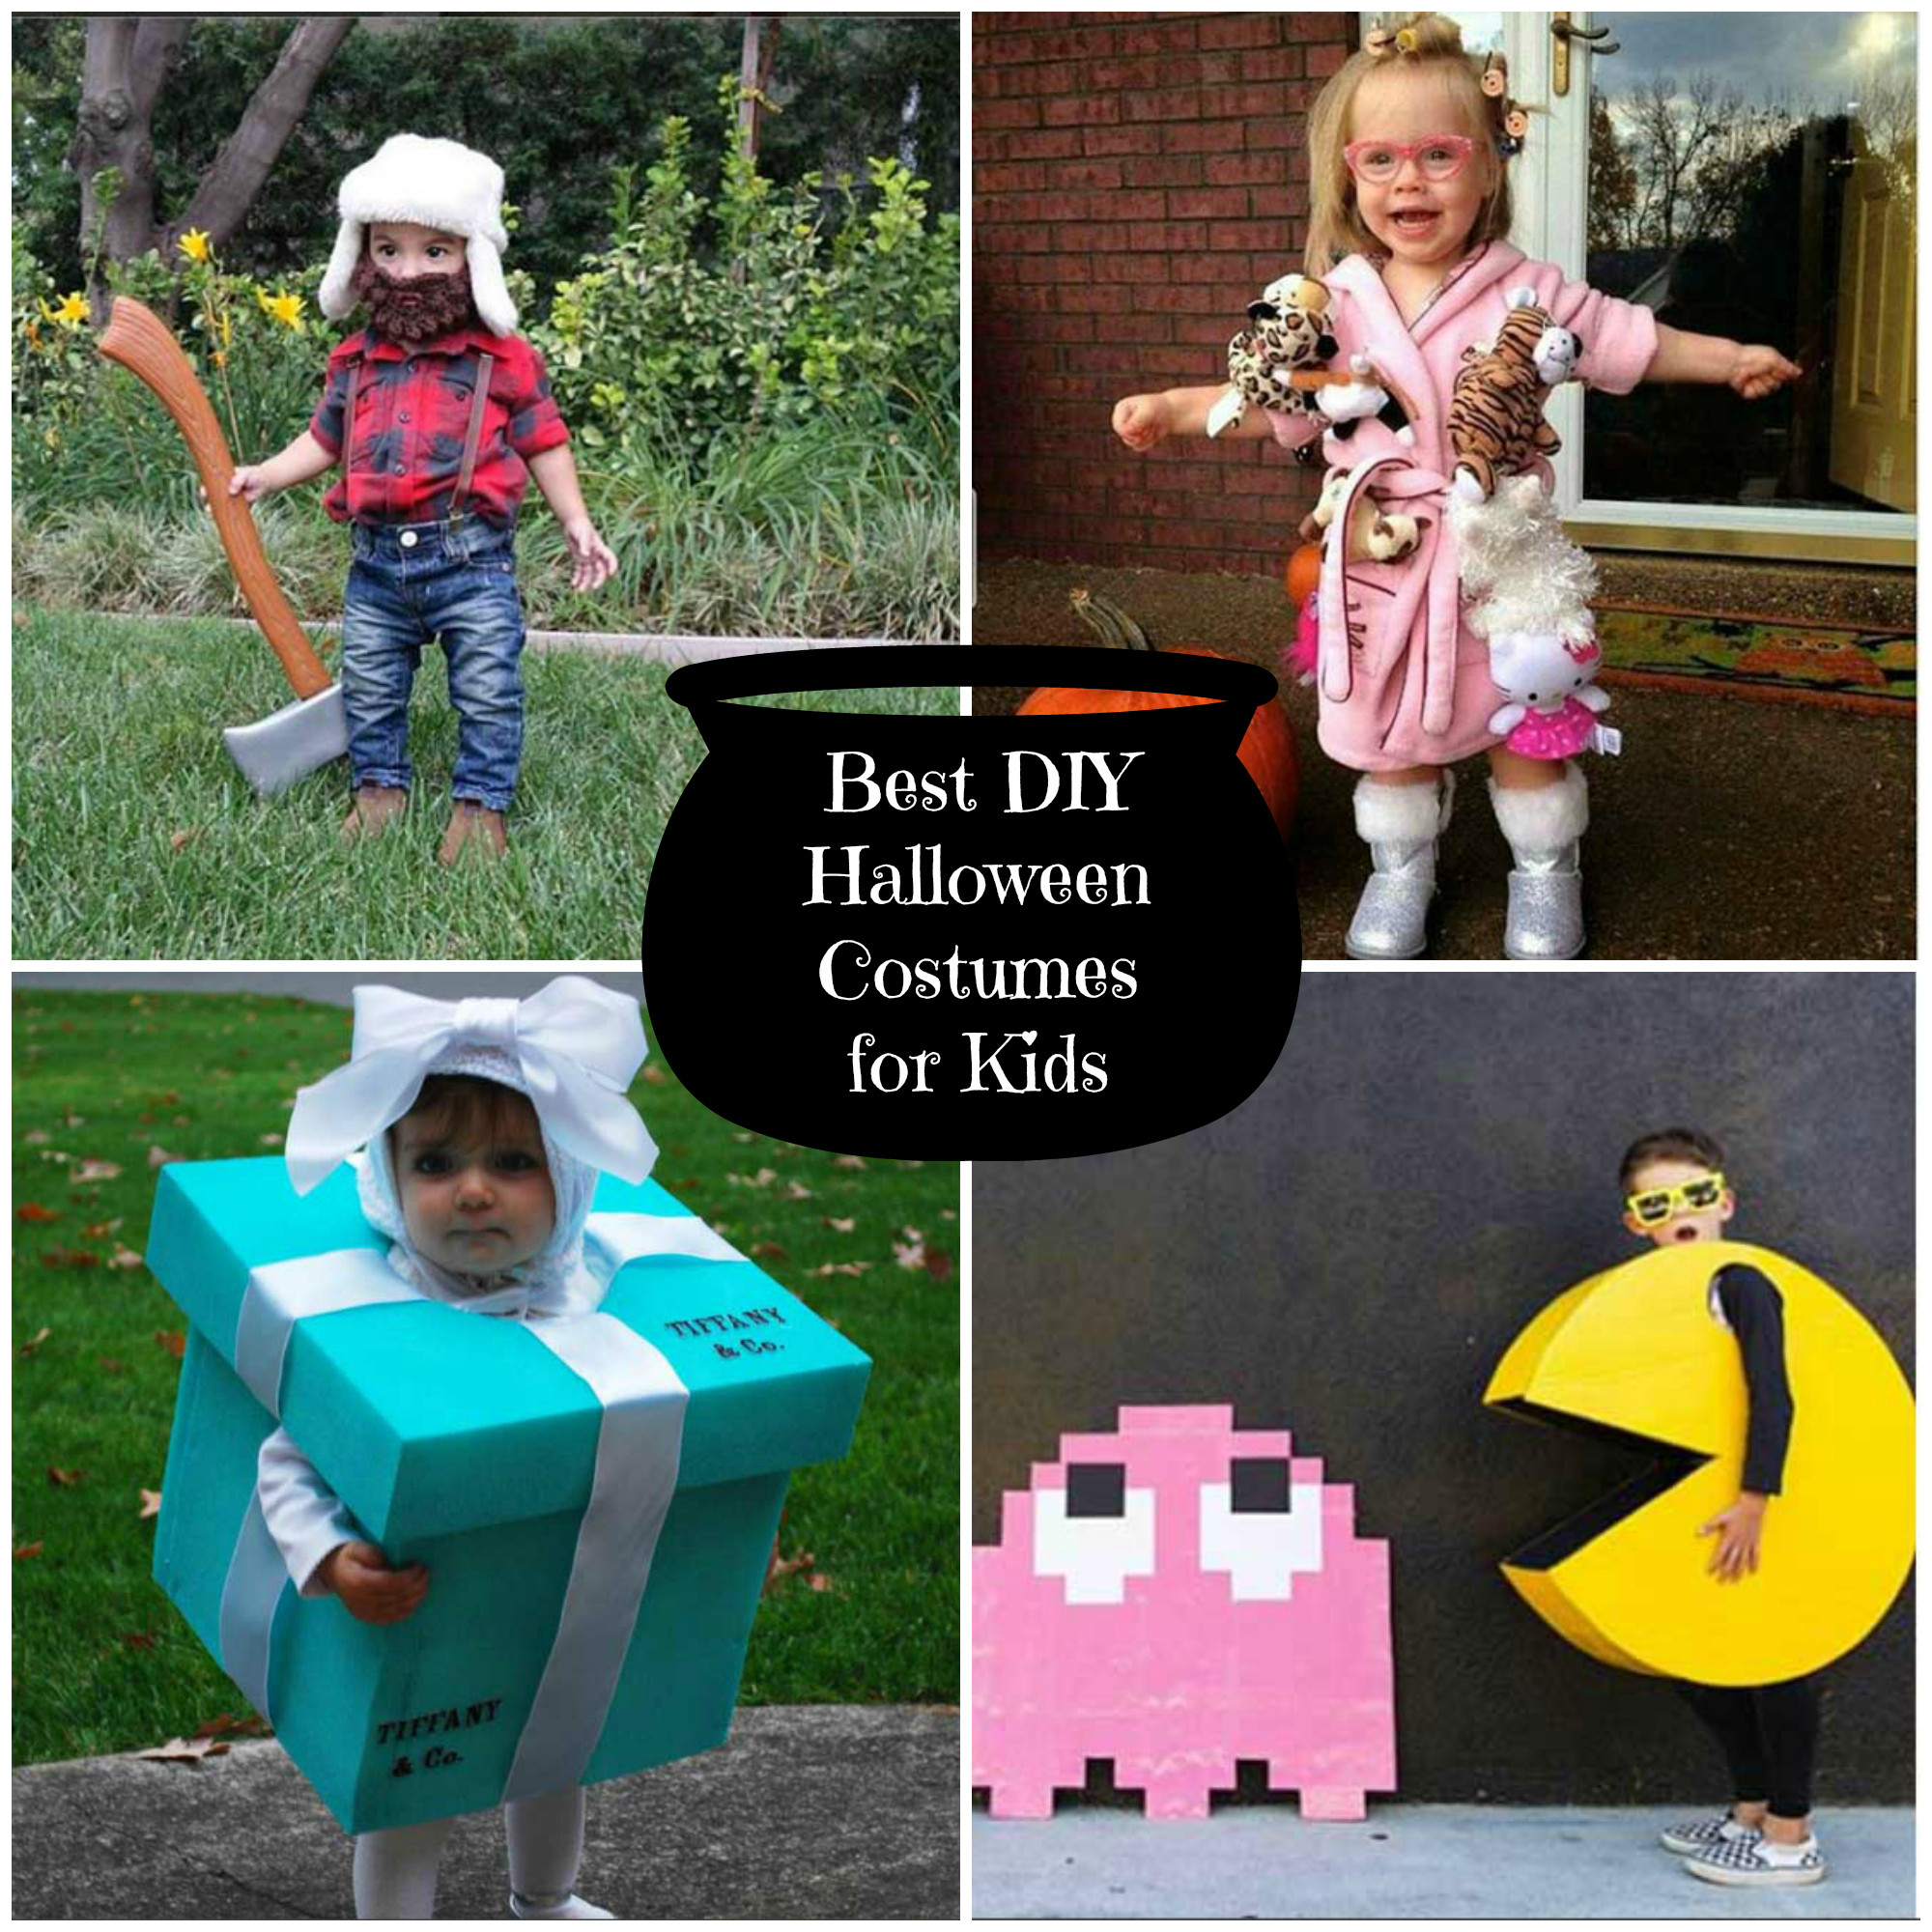 Best DIY Halloween Costumes
 Best DIY Halloween Costumes for Kids Sometimes Homemade